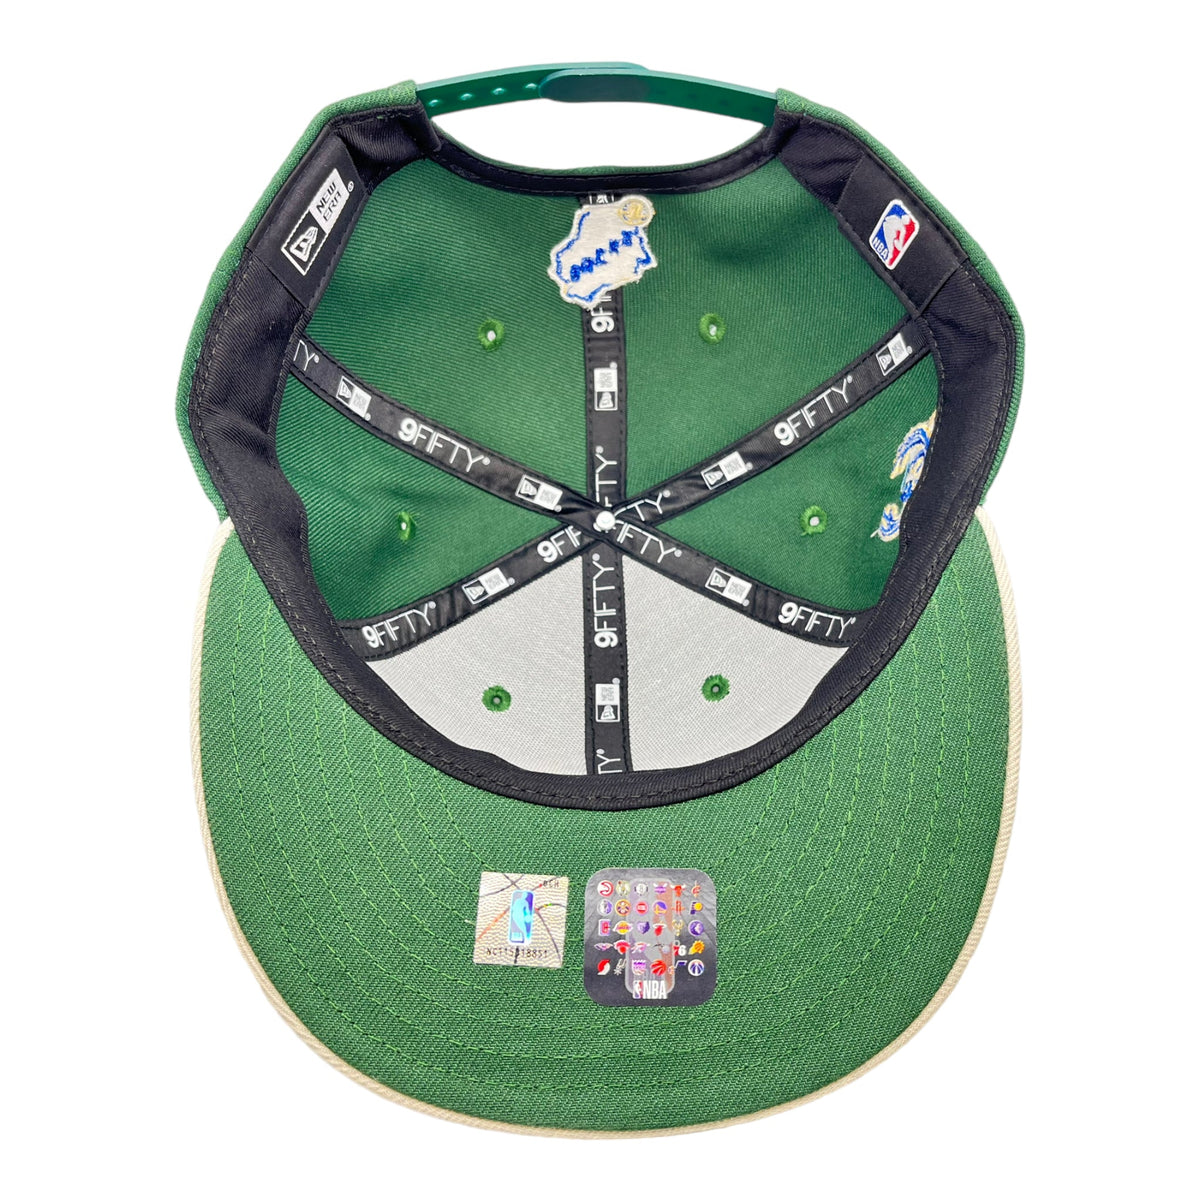 New Era Milwaukee Bucks Custom 9Fifty Snapback Baseball Cap - Green/Cream